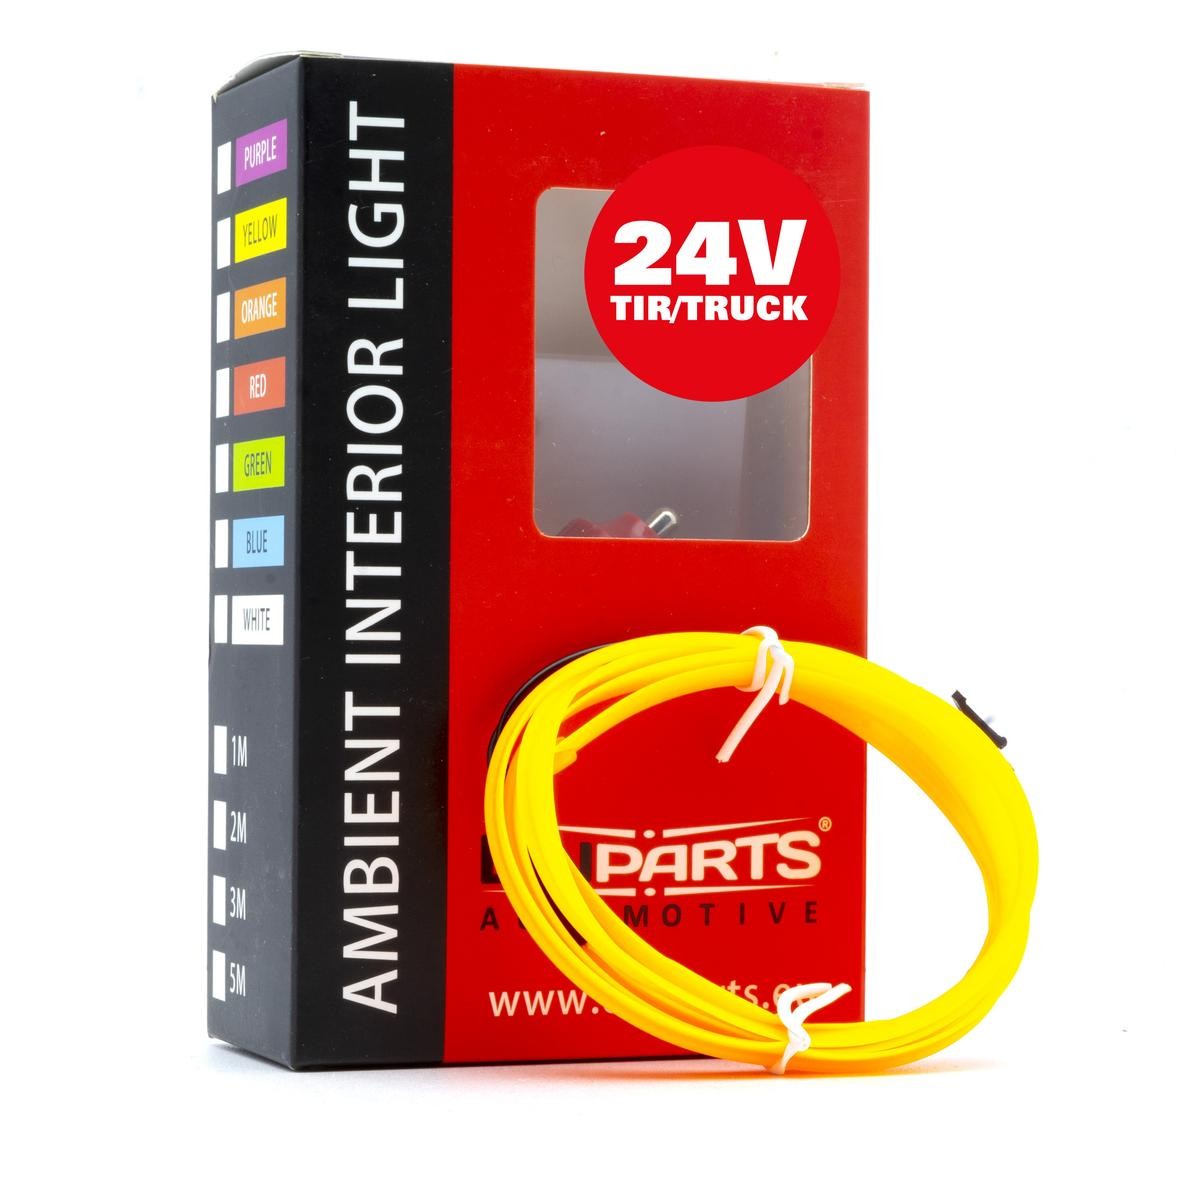 EINPARTS Interior Light EPAL1M AMBER 24V buy